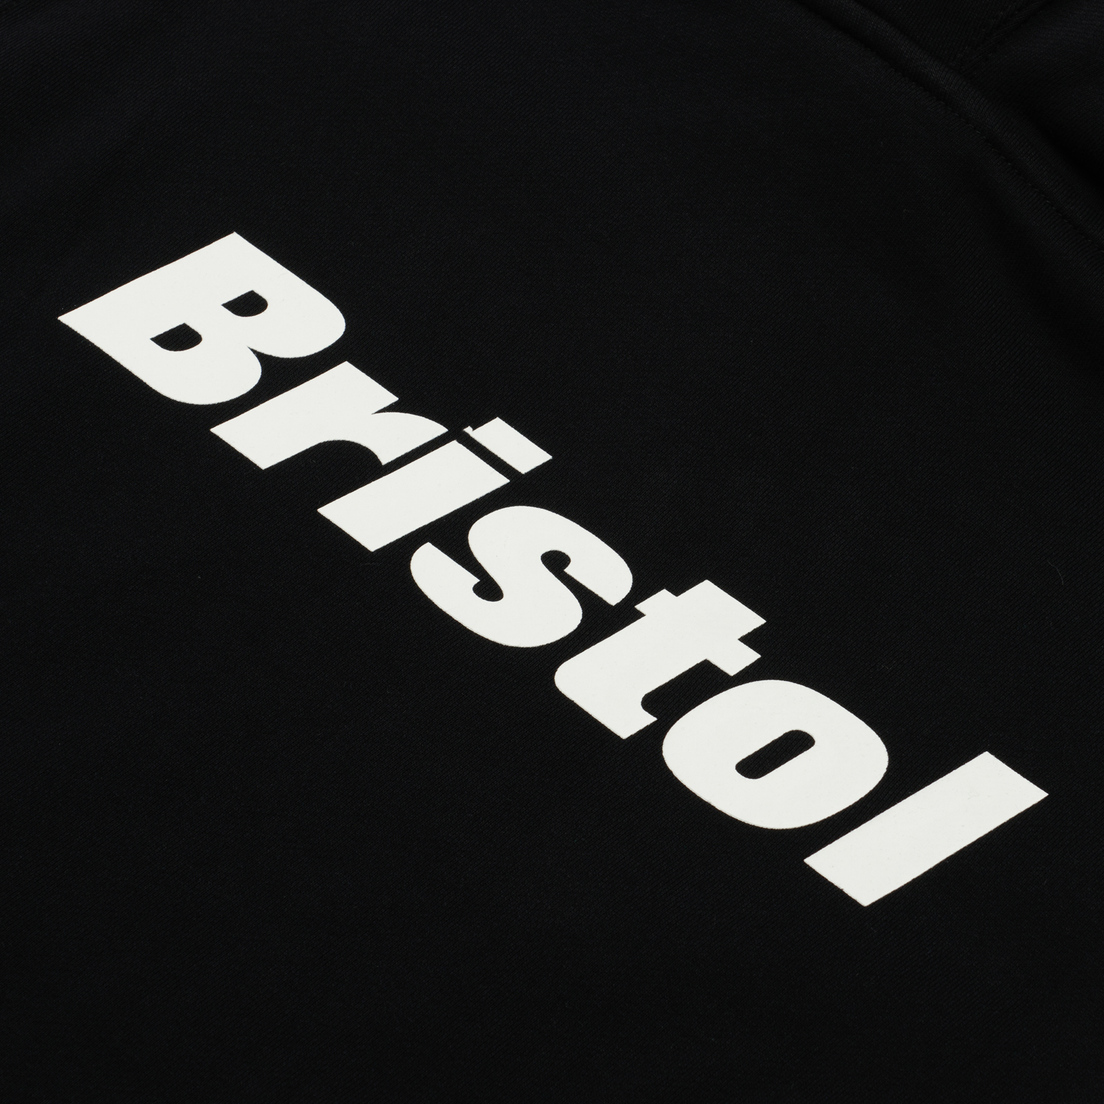 F.C. Real Bristol